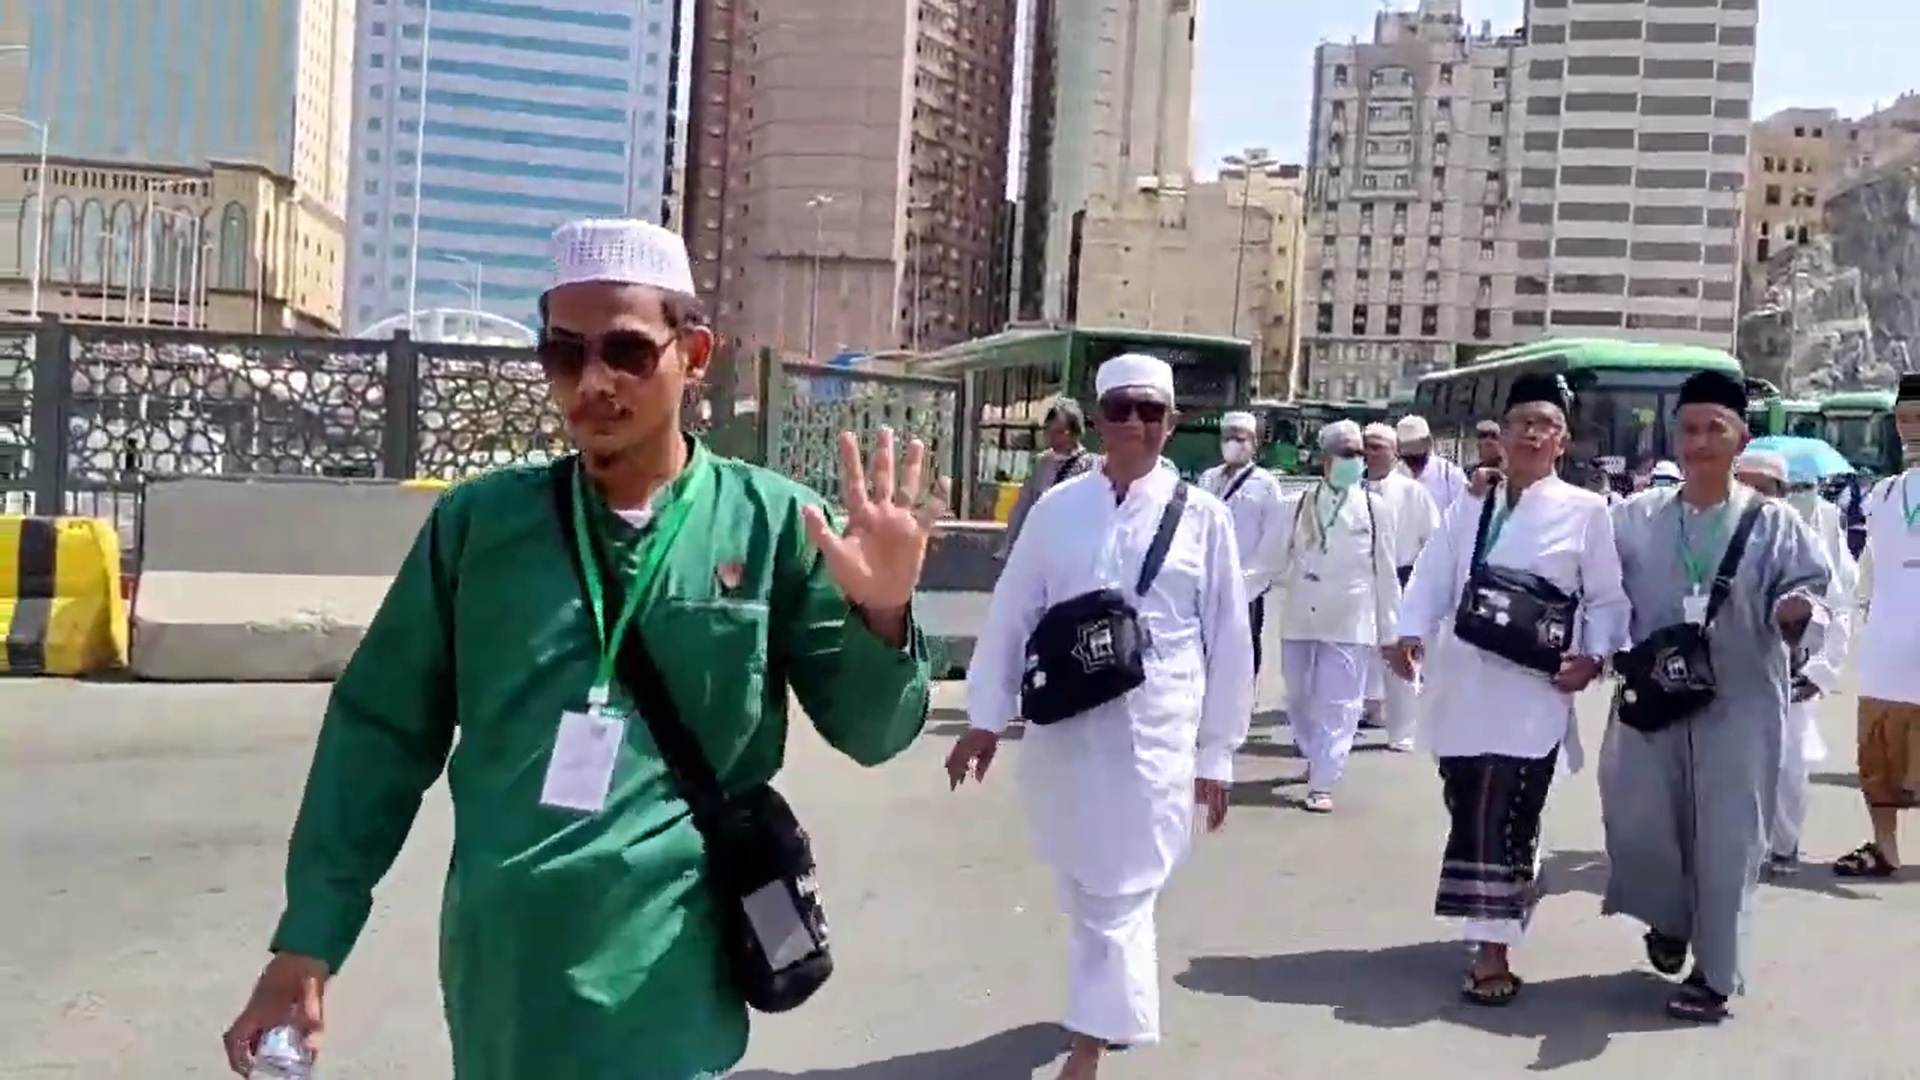 Jamaah Mulai Beraktivitas di Makkah, Kemenag Ingatkan Catat Nama Hotel, Bawa Minum, dan Jangan Berjalan Tanpa Sandal